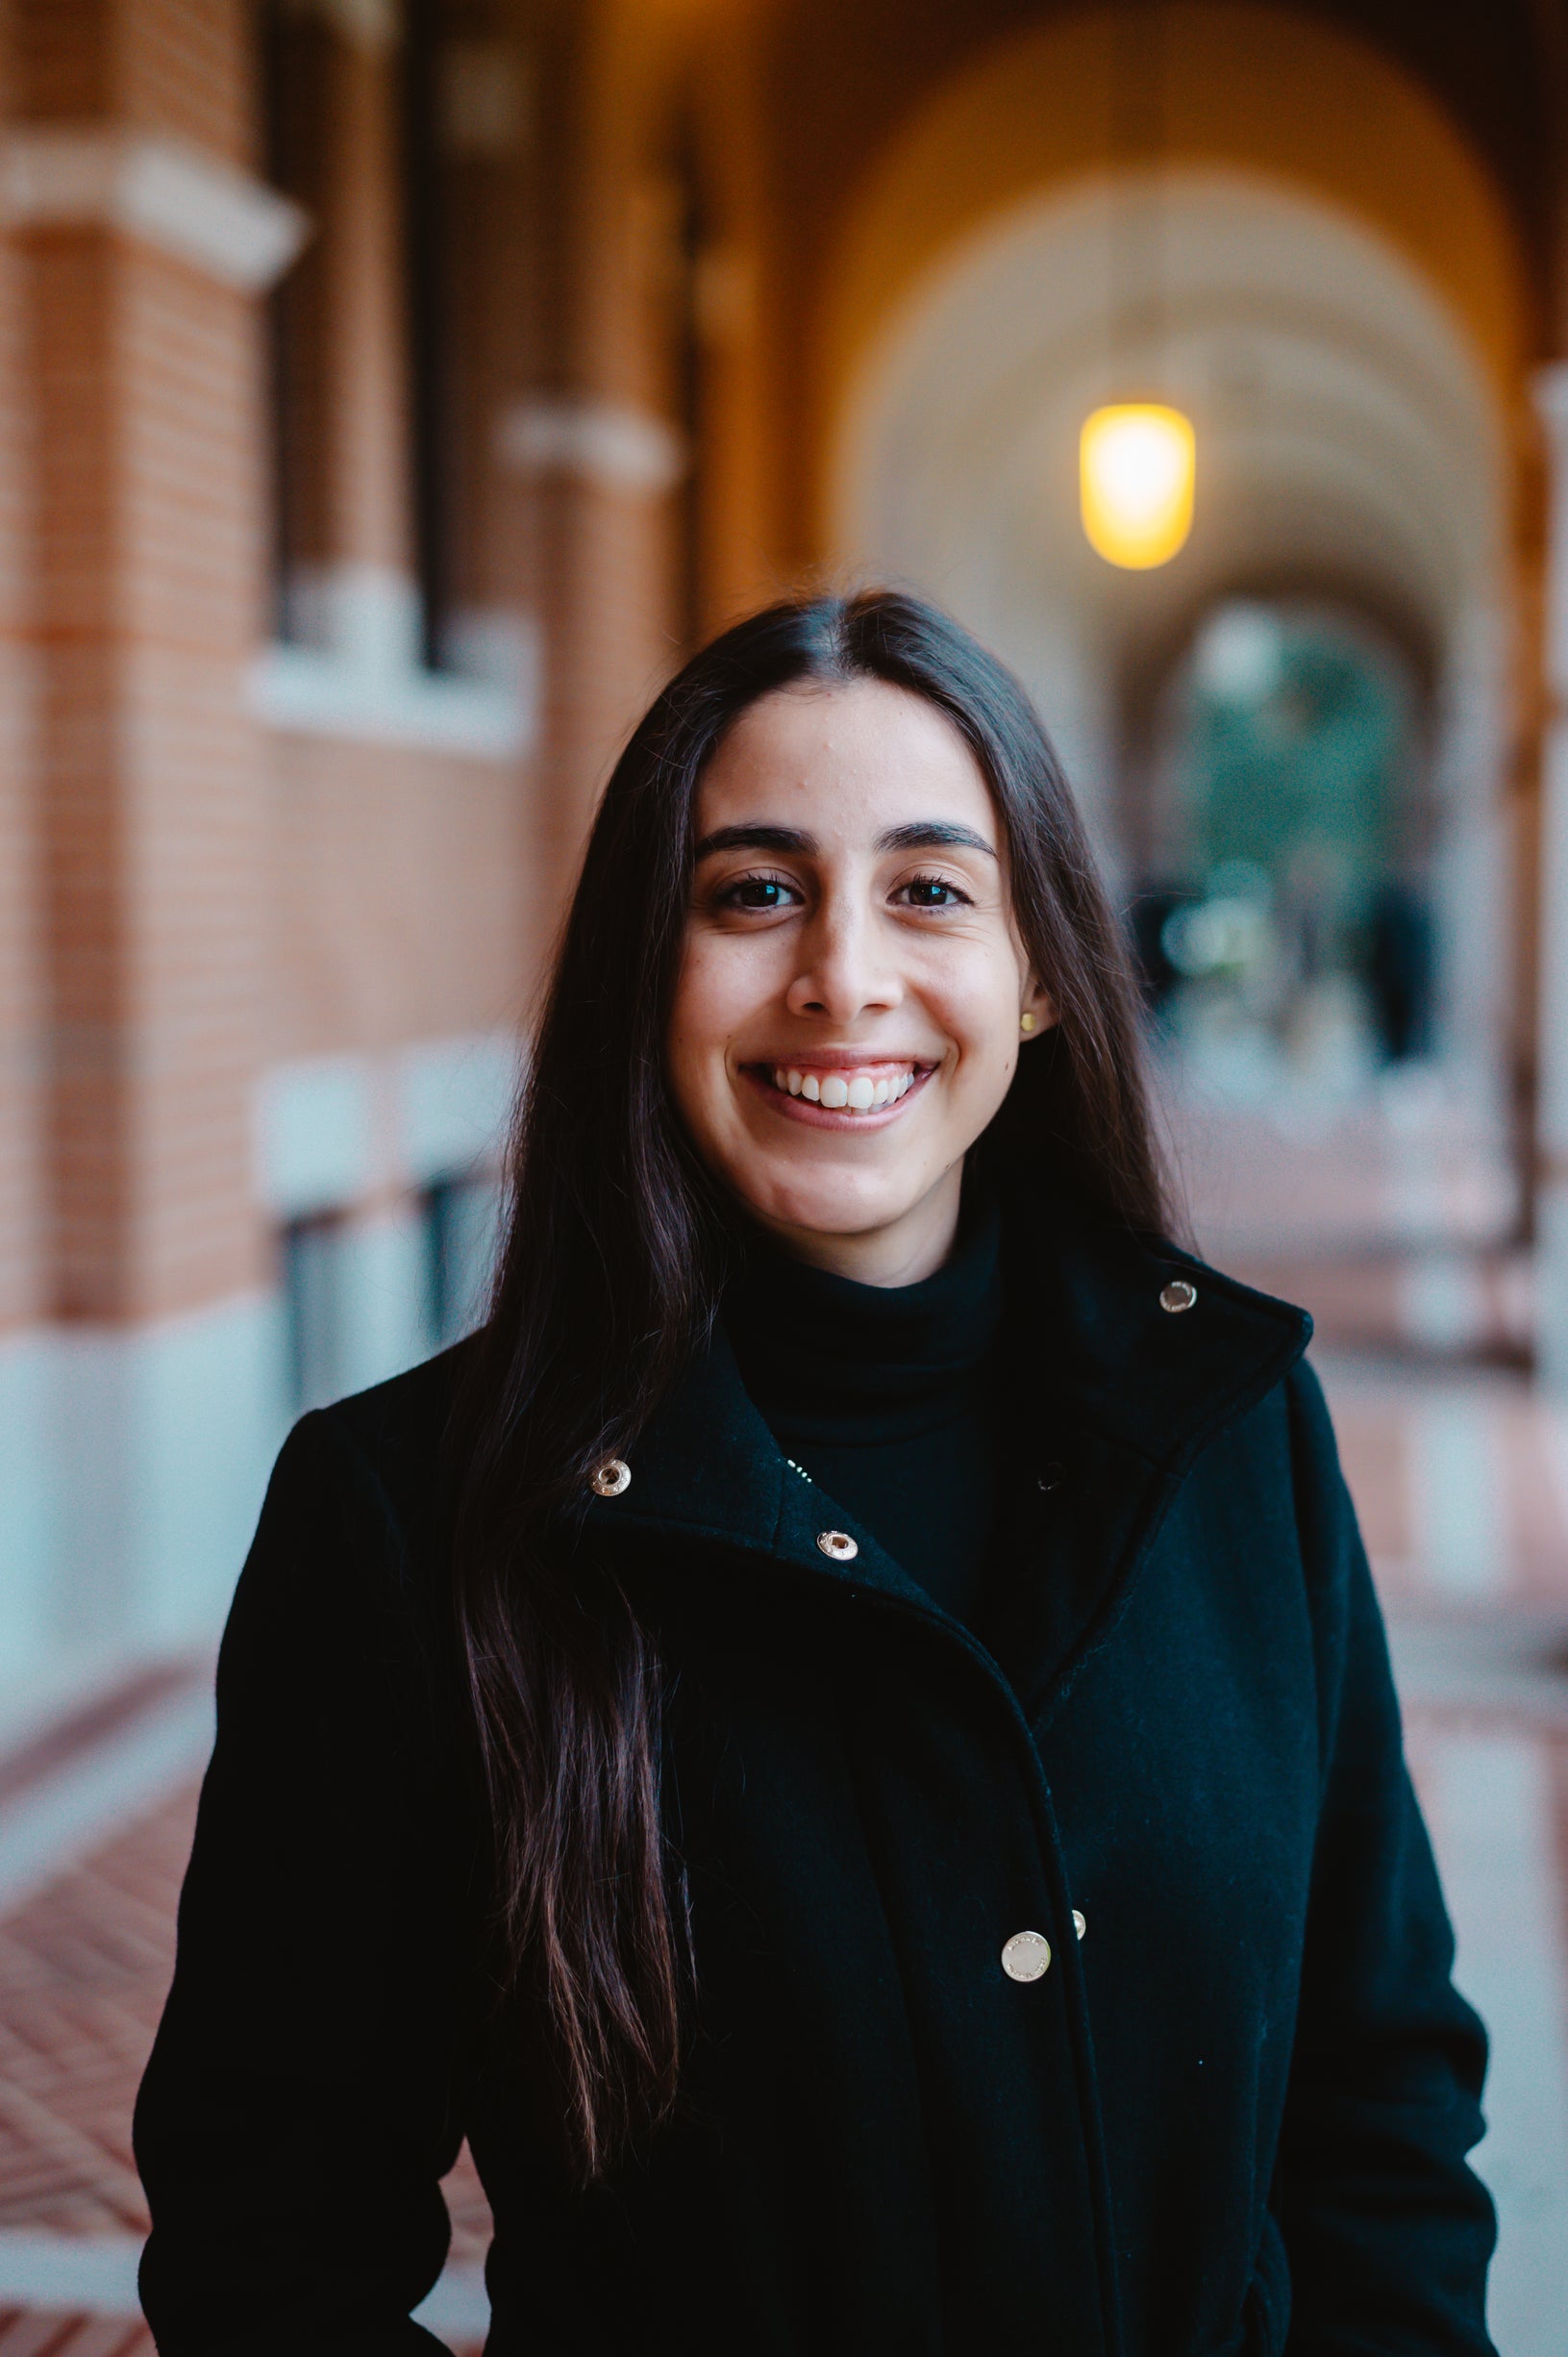 Eliana Cadena Semanate, Fulbrighter at Rice University and graduate student in Houston, Texas